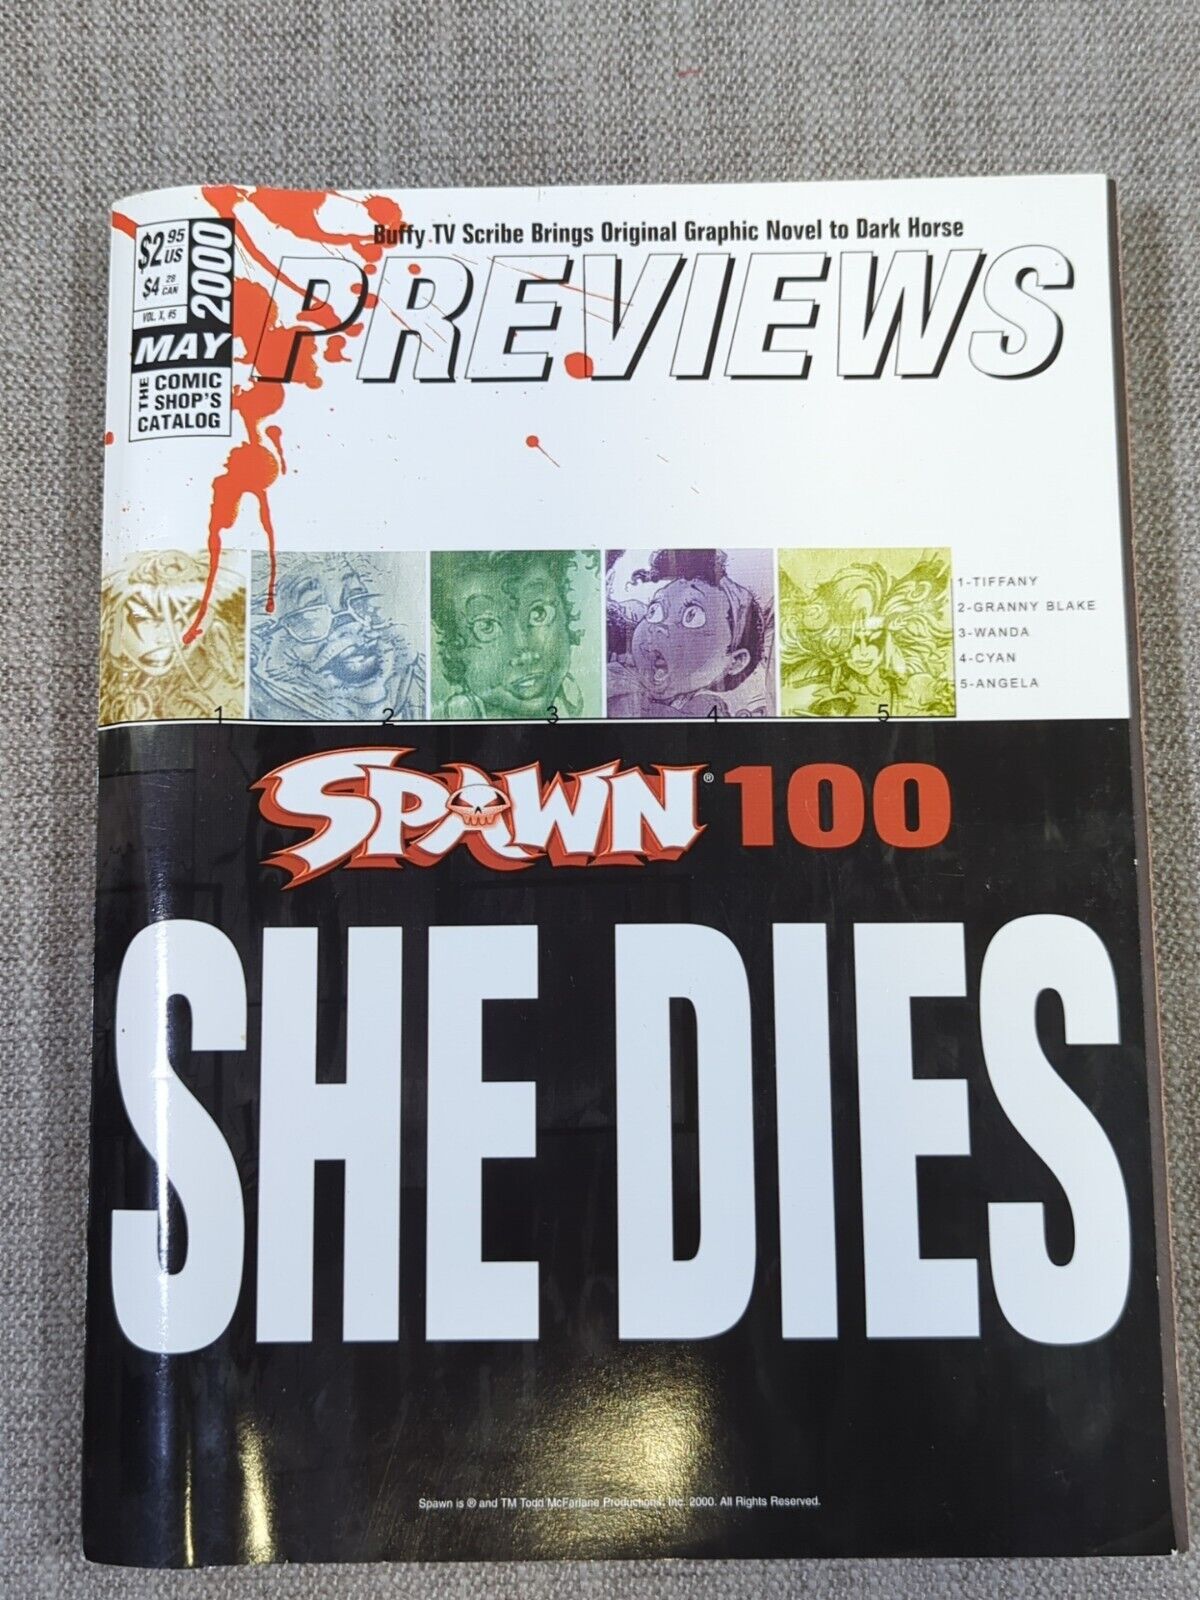 Previews The Comic Shop\'s Catalog May Spawn 100 She Dies Superman Vol. X #5